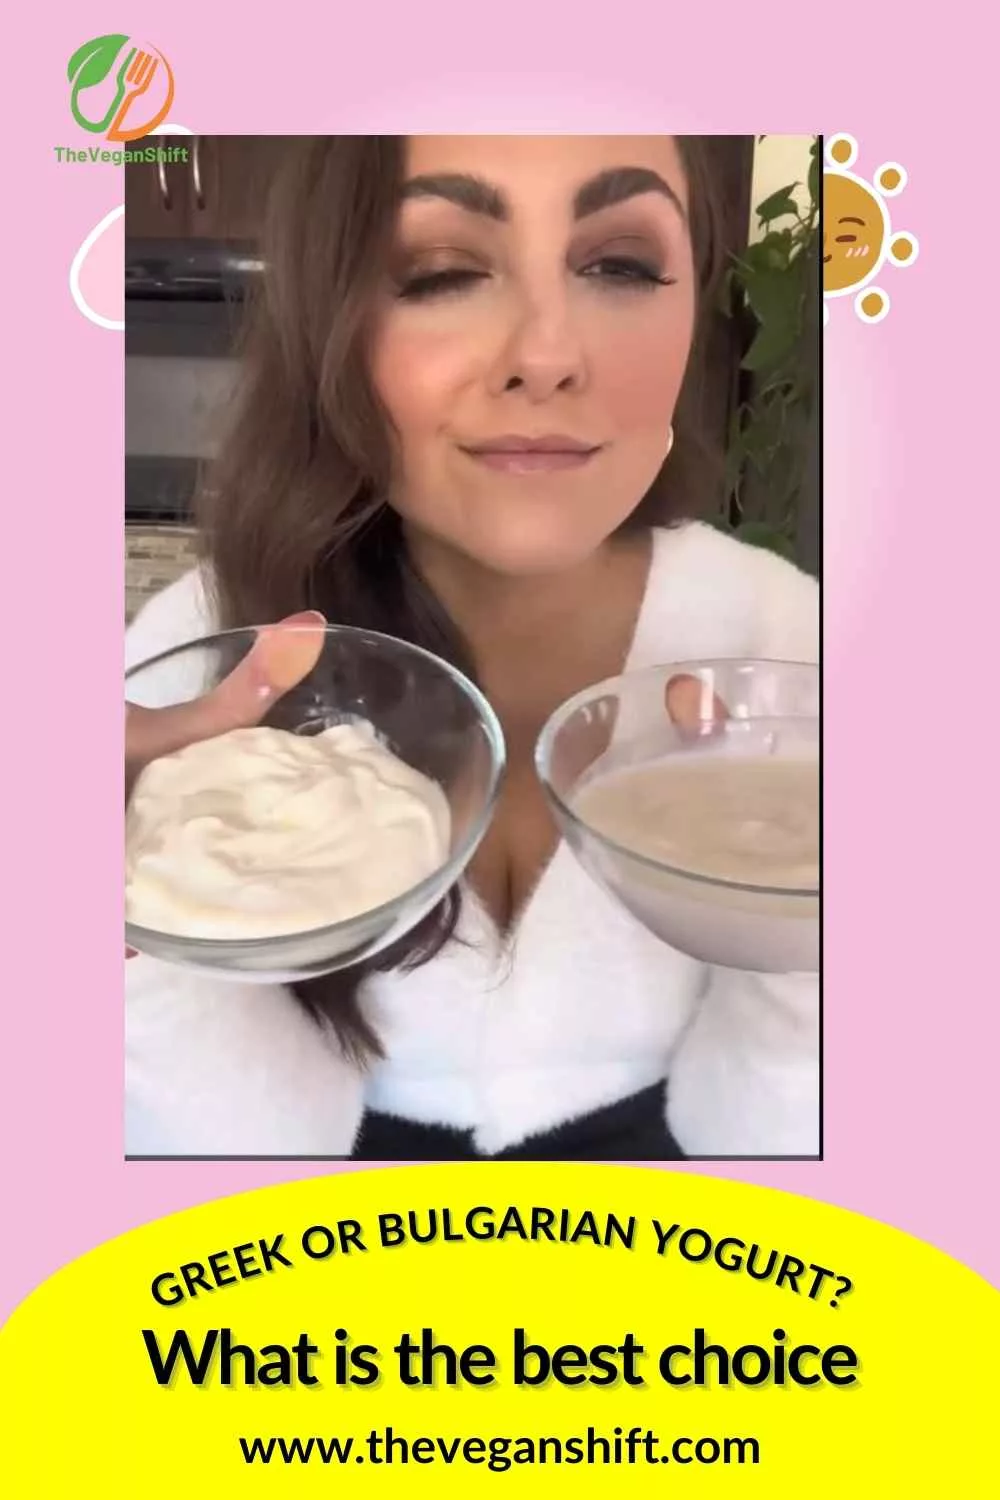 Greek or Bulgarian yogurt?
What is the best choice?